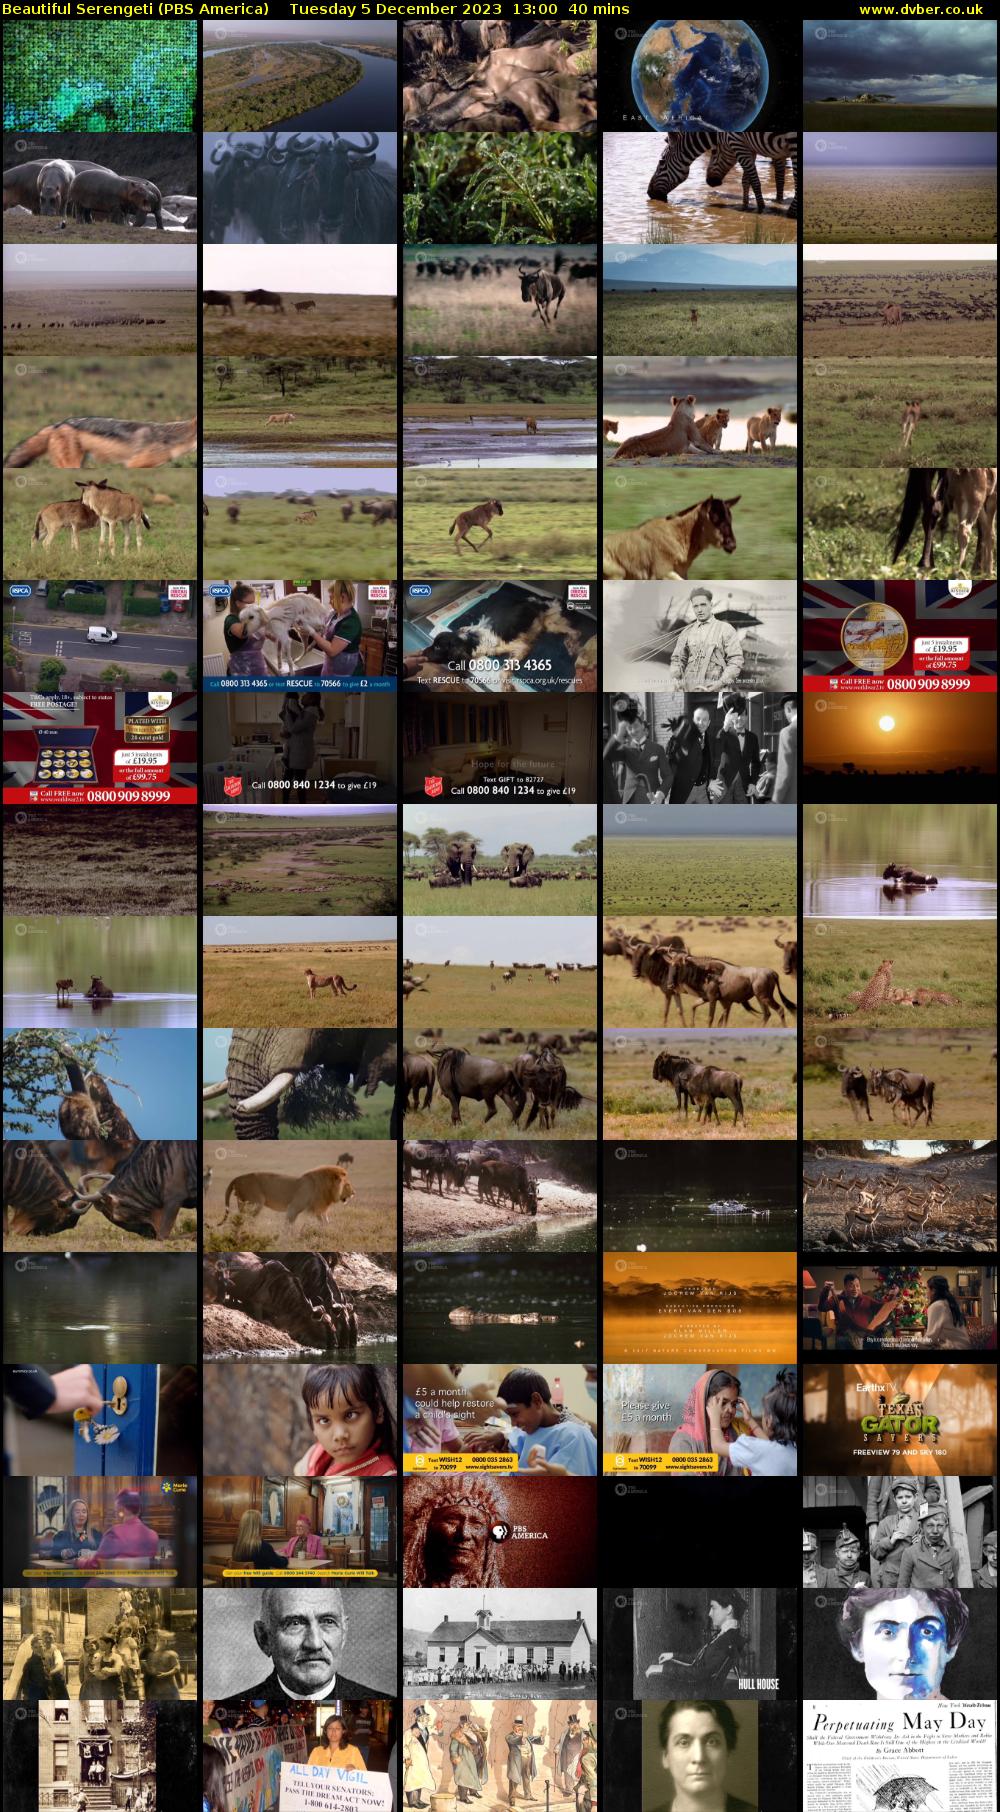 Beautiful Serengeti (PBS America) Tuesday 5 December 2023 13:00 - 13:40